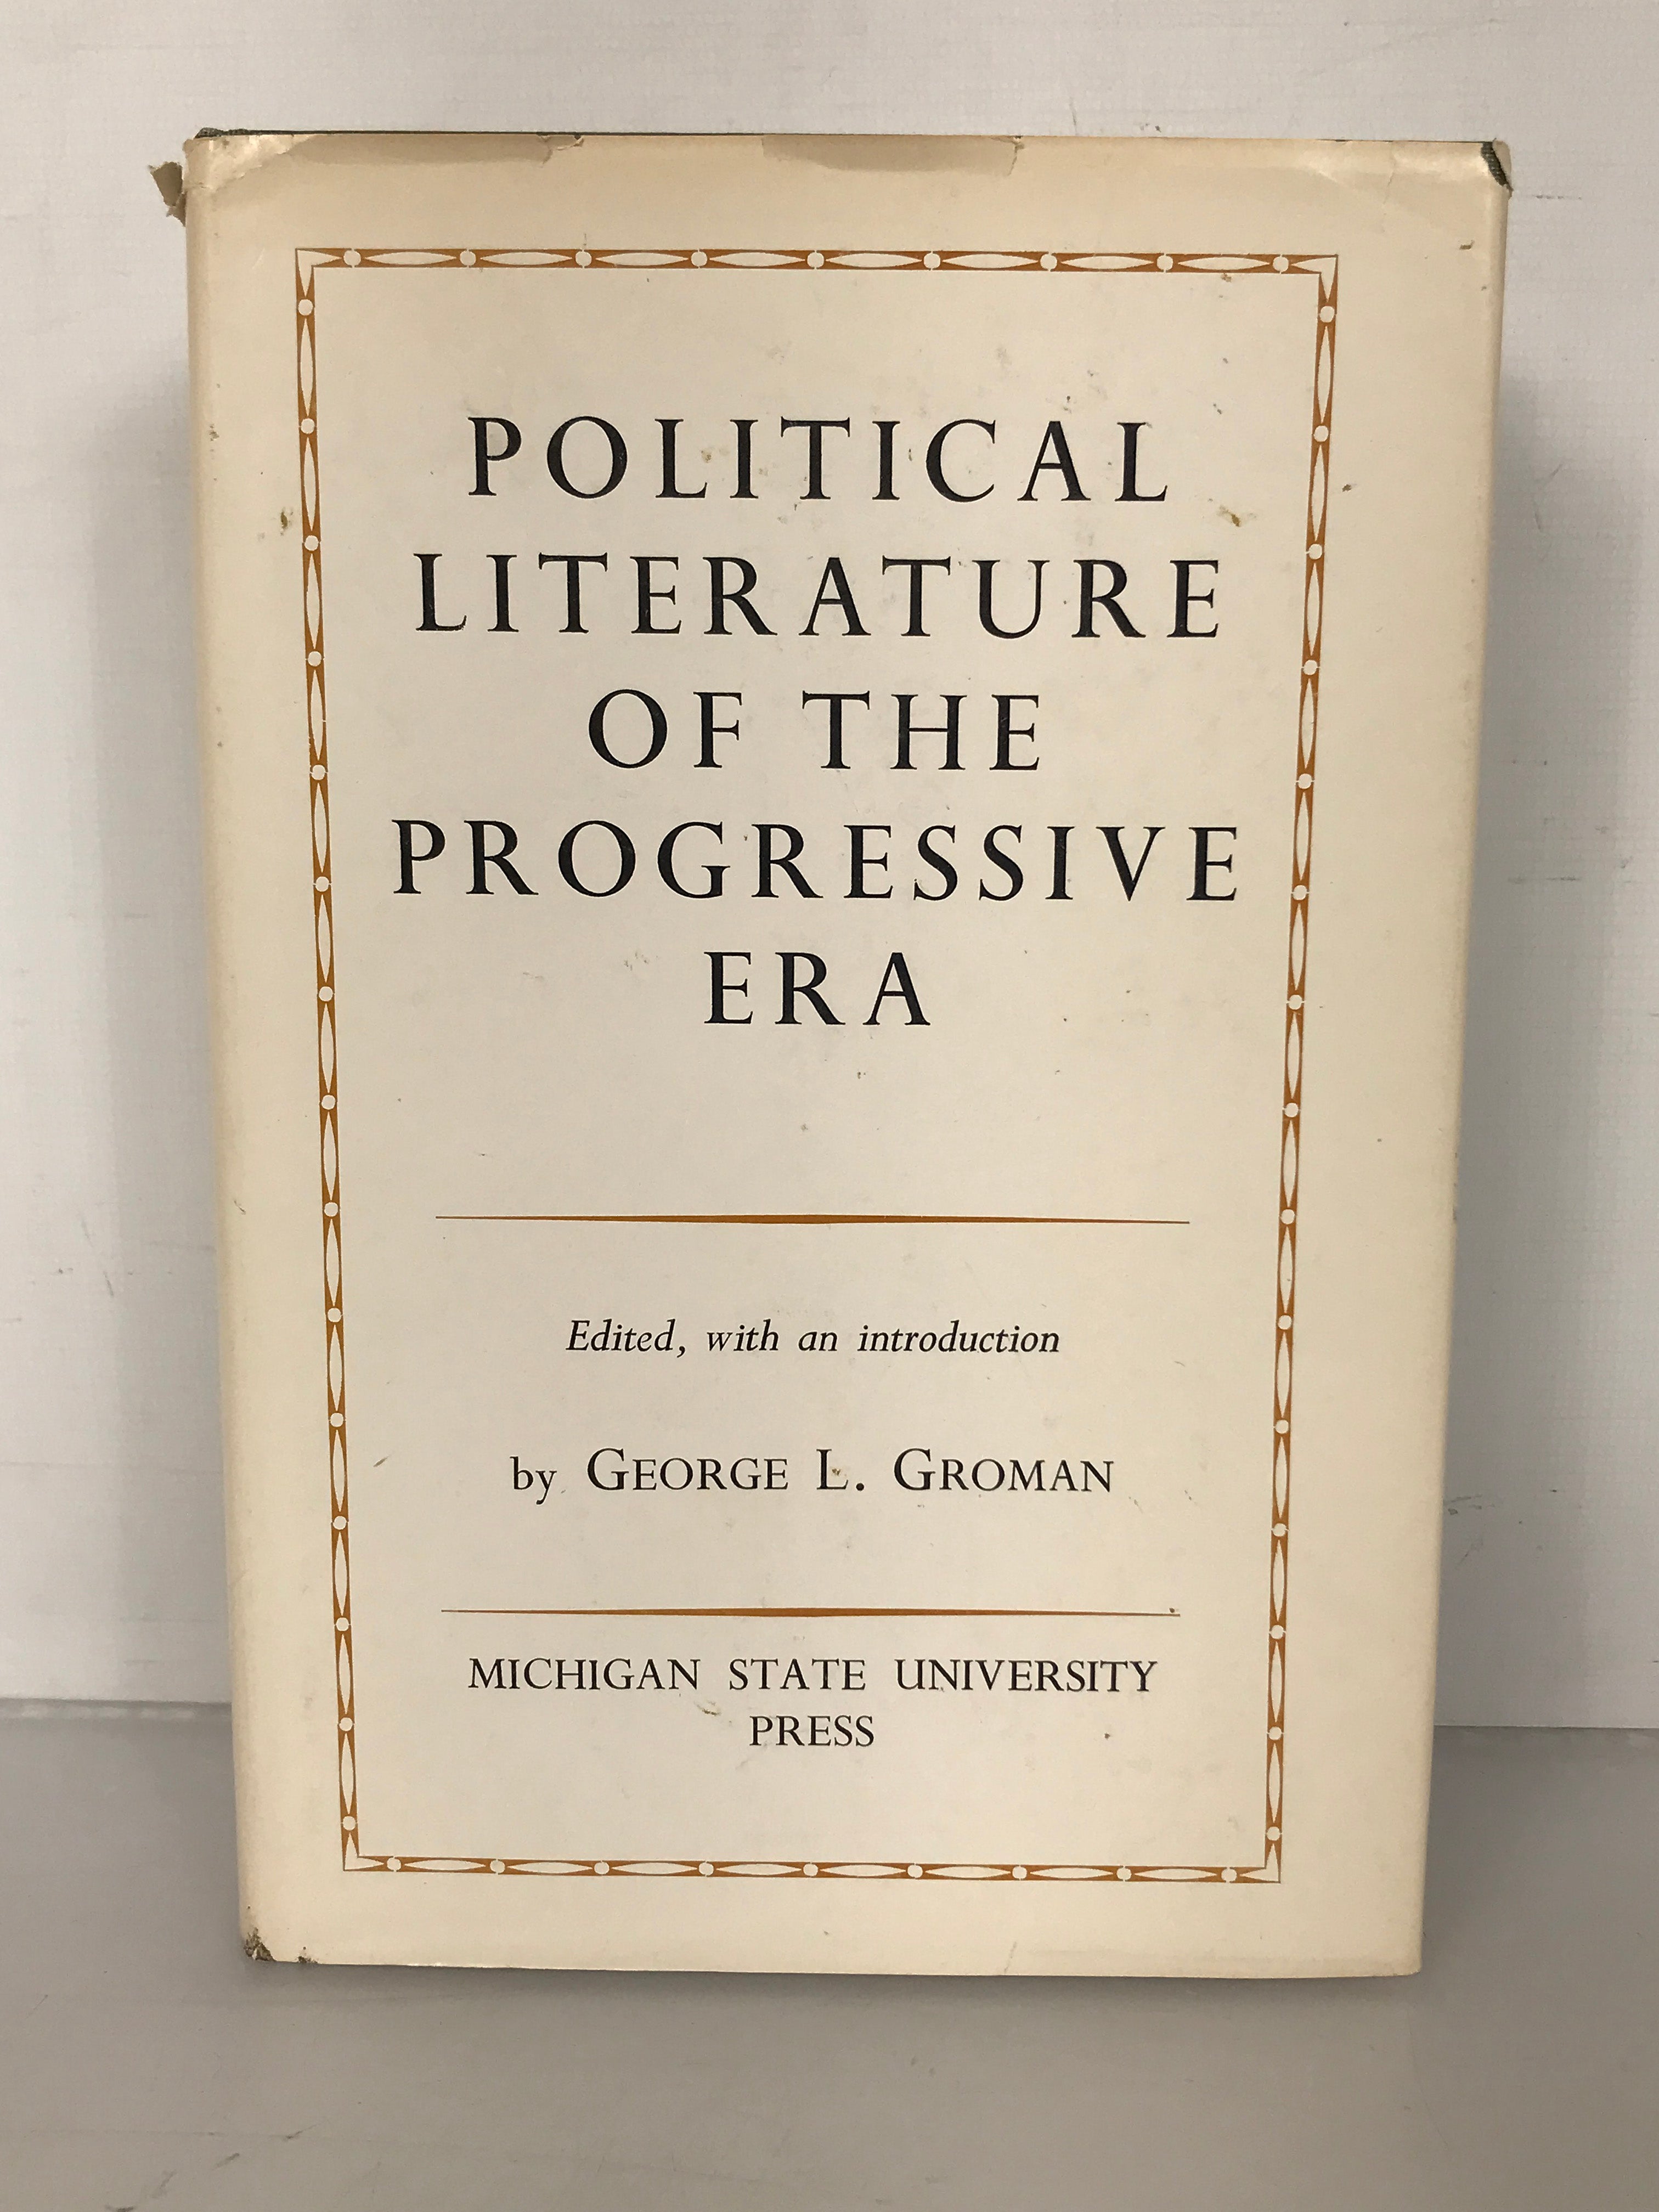 Political Literature of the Progressive Era by Groman 1967 HC DJ